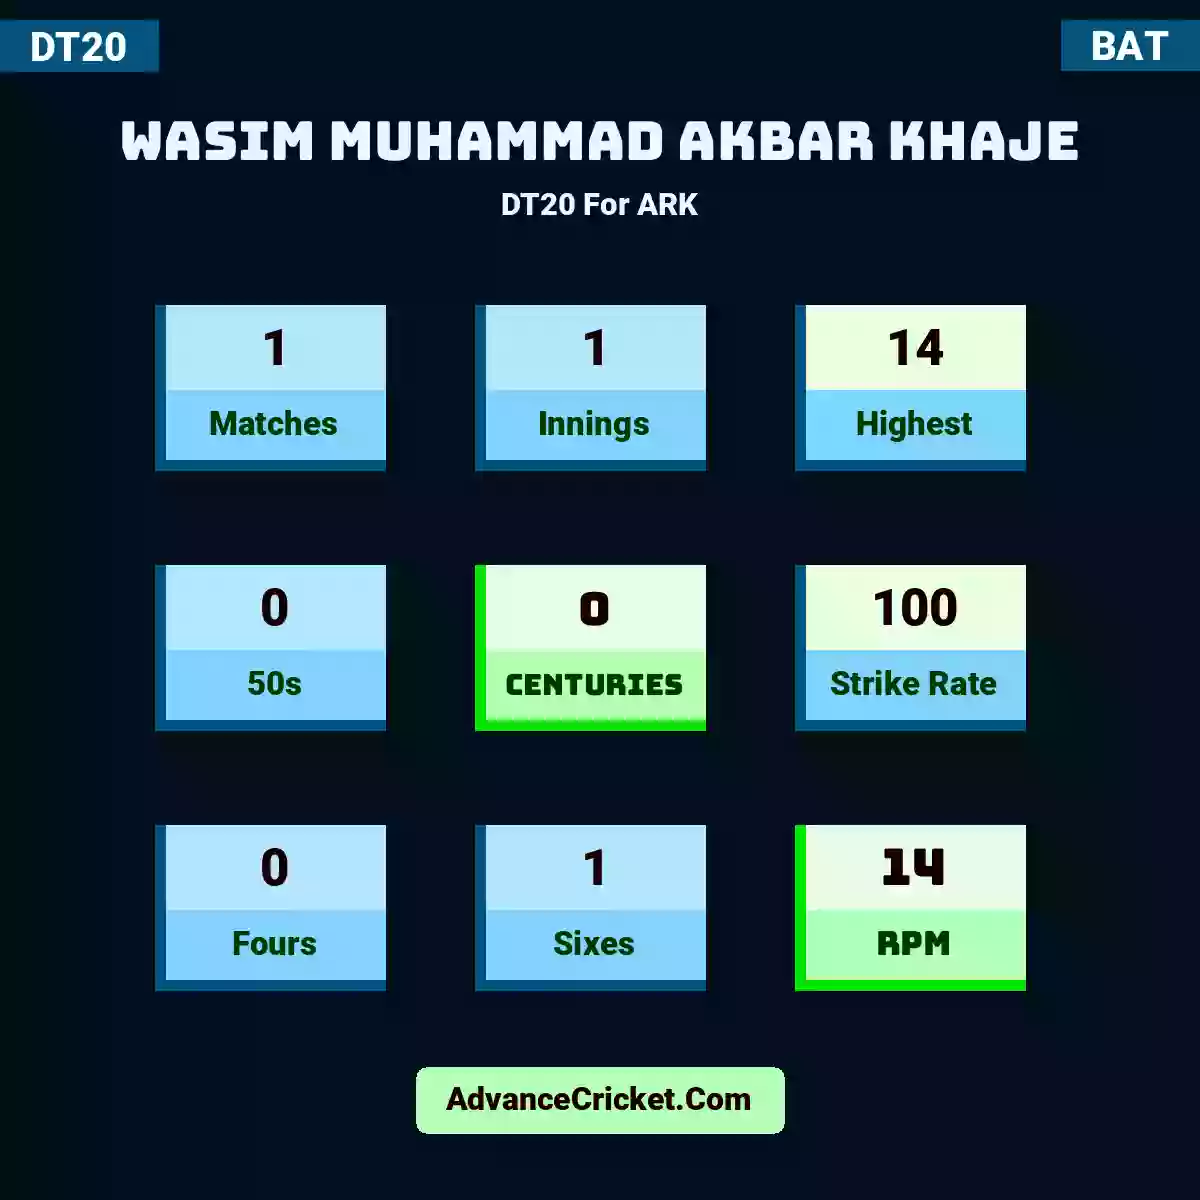 Wasim Muhammad Akbar Khaje DT20  For ARK, Wasim Muhammad Akbar Khaje played 1 matches, scored 14 runs as highest, 0 half-centuries, and 0 centuries, with a strike rate of 100. W.Muhammad.Akbar.Khaje hit 0 fours and 1 sixes, with an RPM of 14.